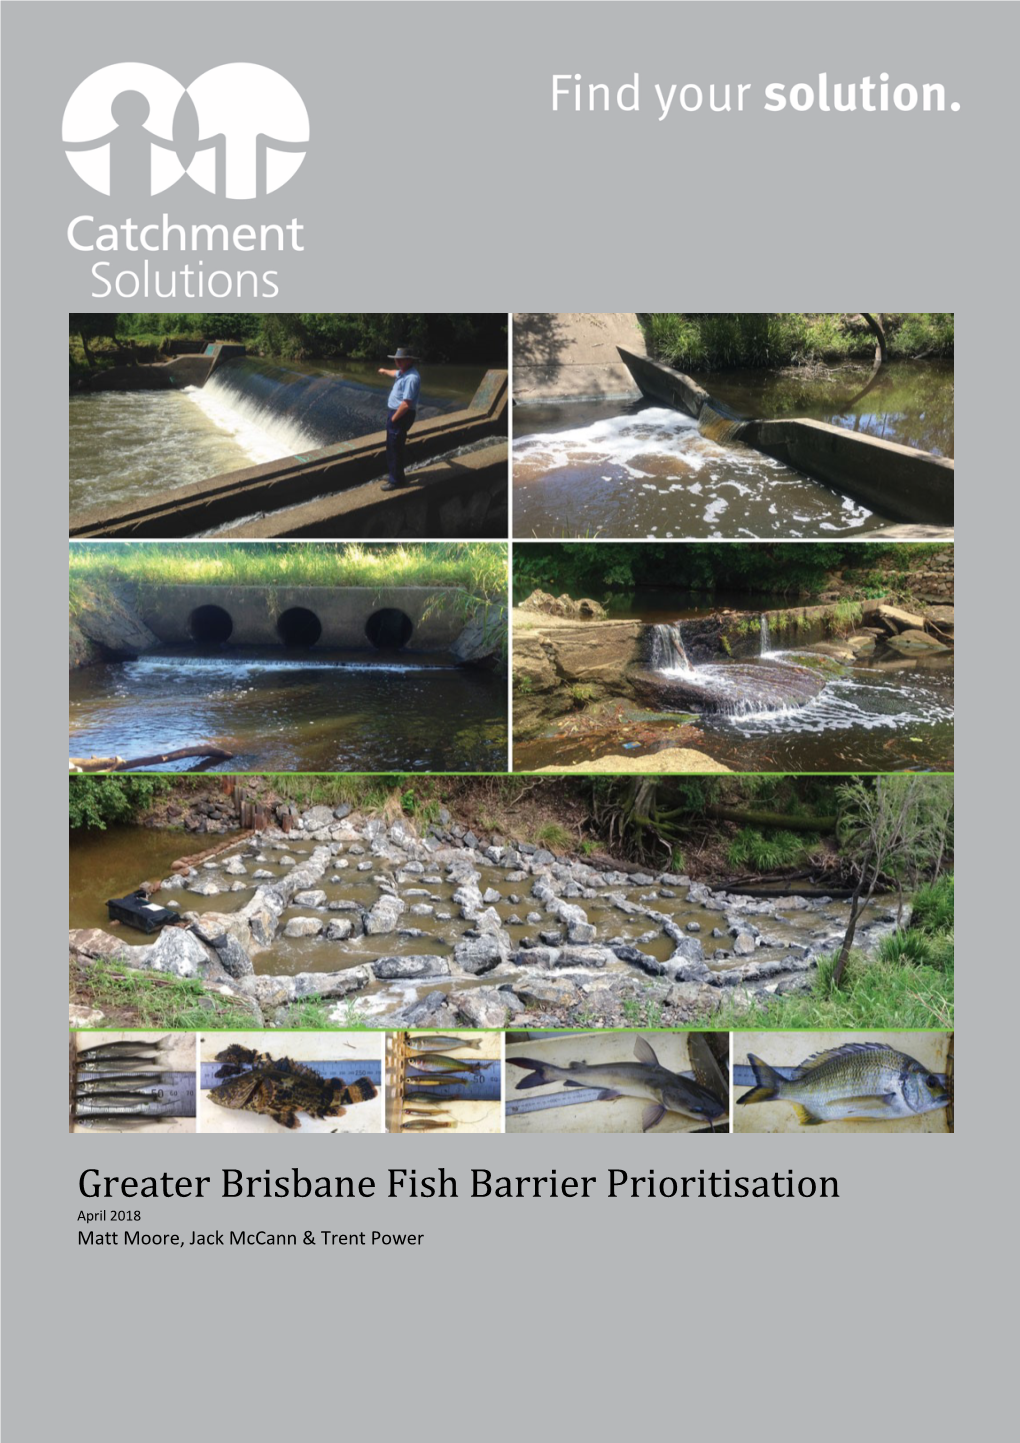 Greater Brisbane Fish Barrier Prioritisation April 2018 Matt Moore, Jack Mccann & Trent Power